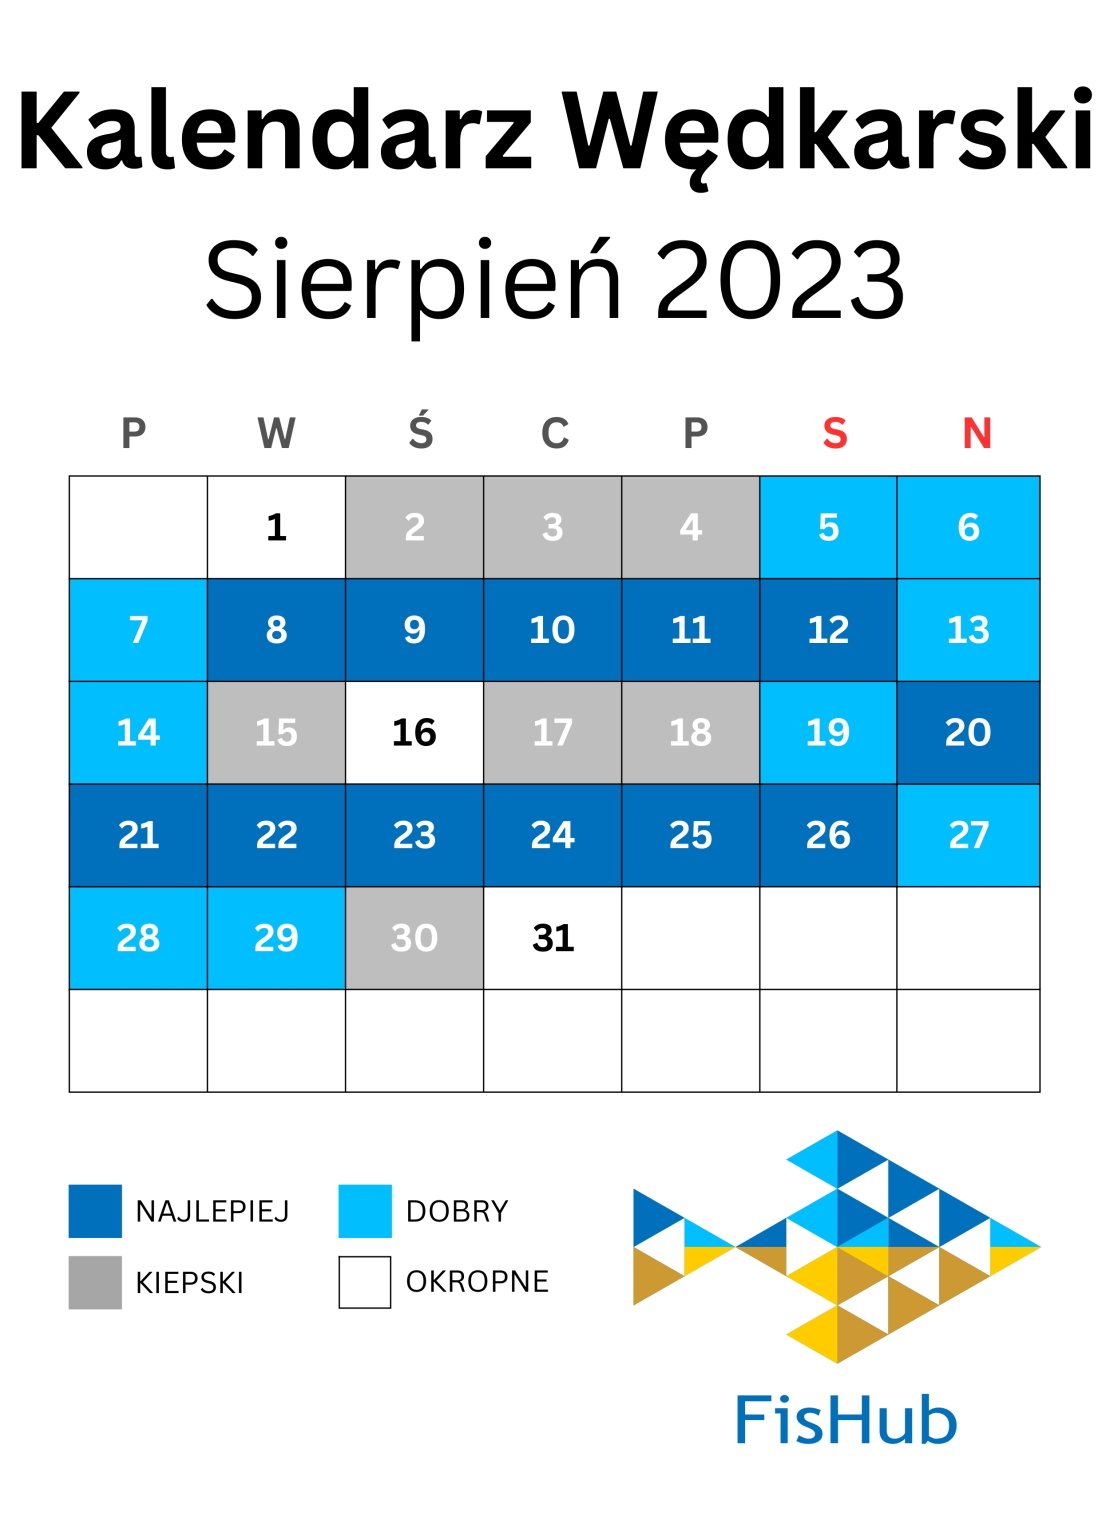 Kalendarz rybaka na sierpień 2023